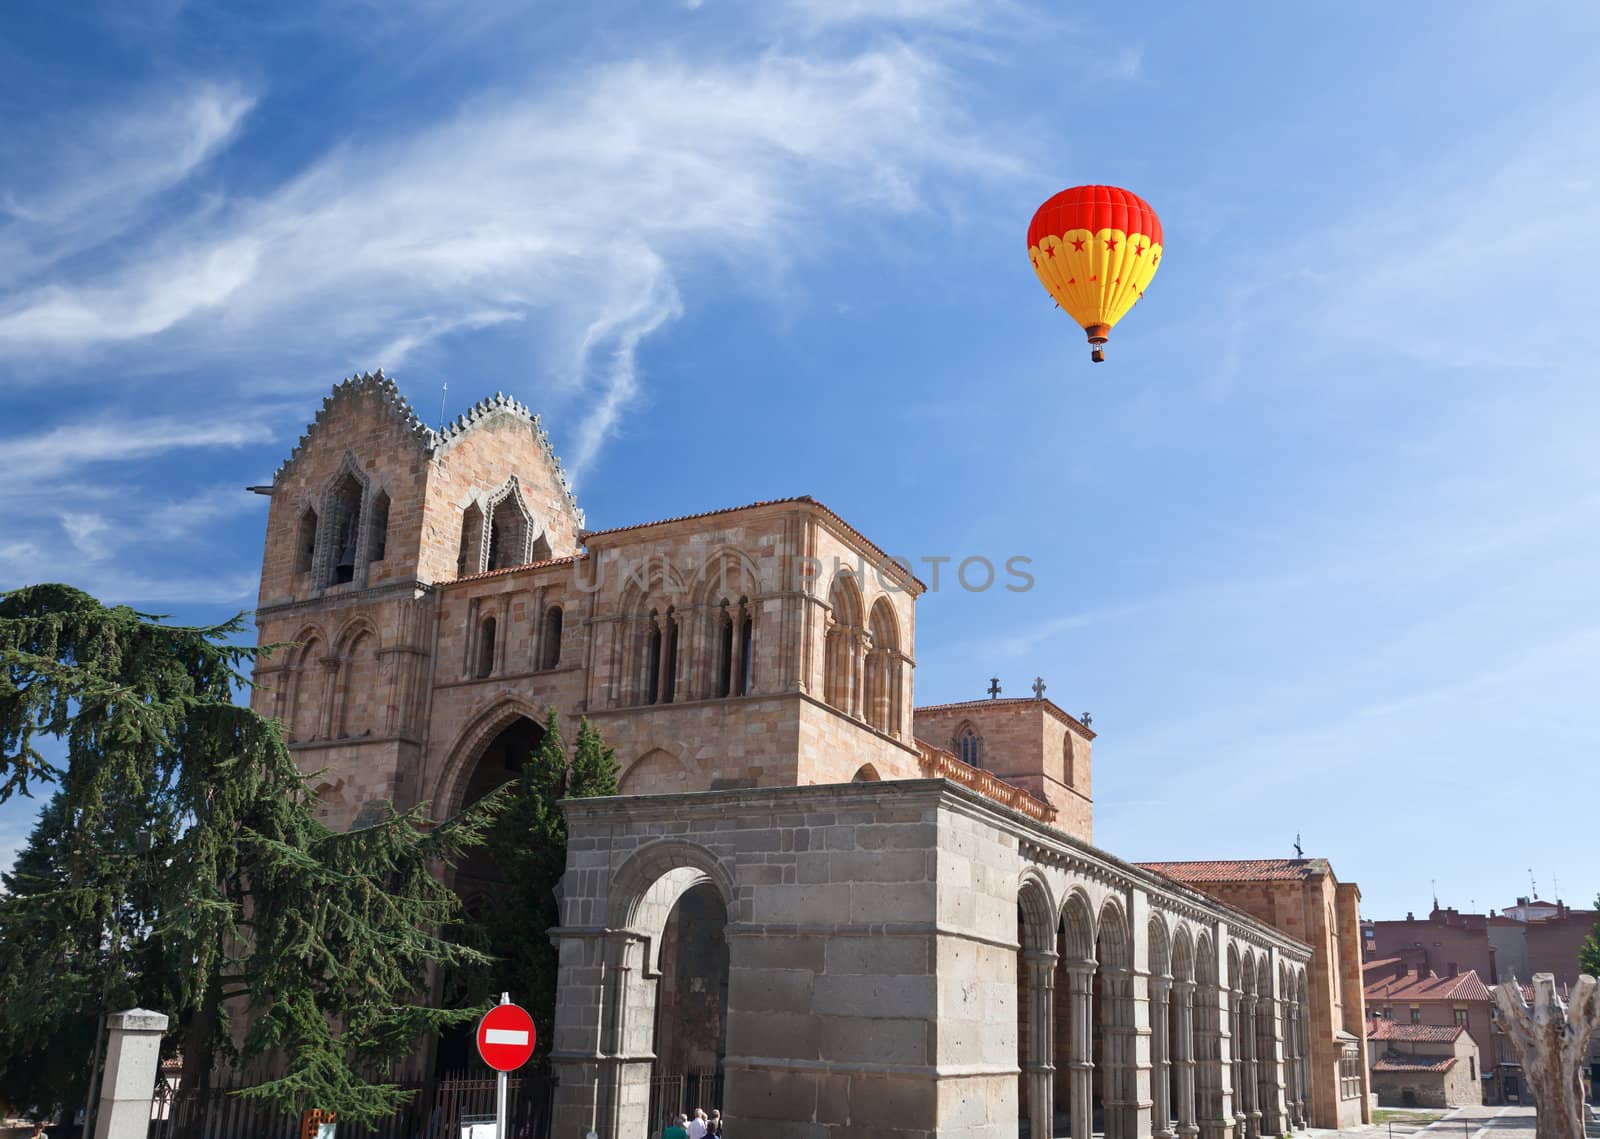 The San Vicente Basilica in Avila by gary718